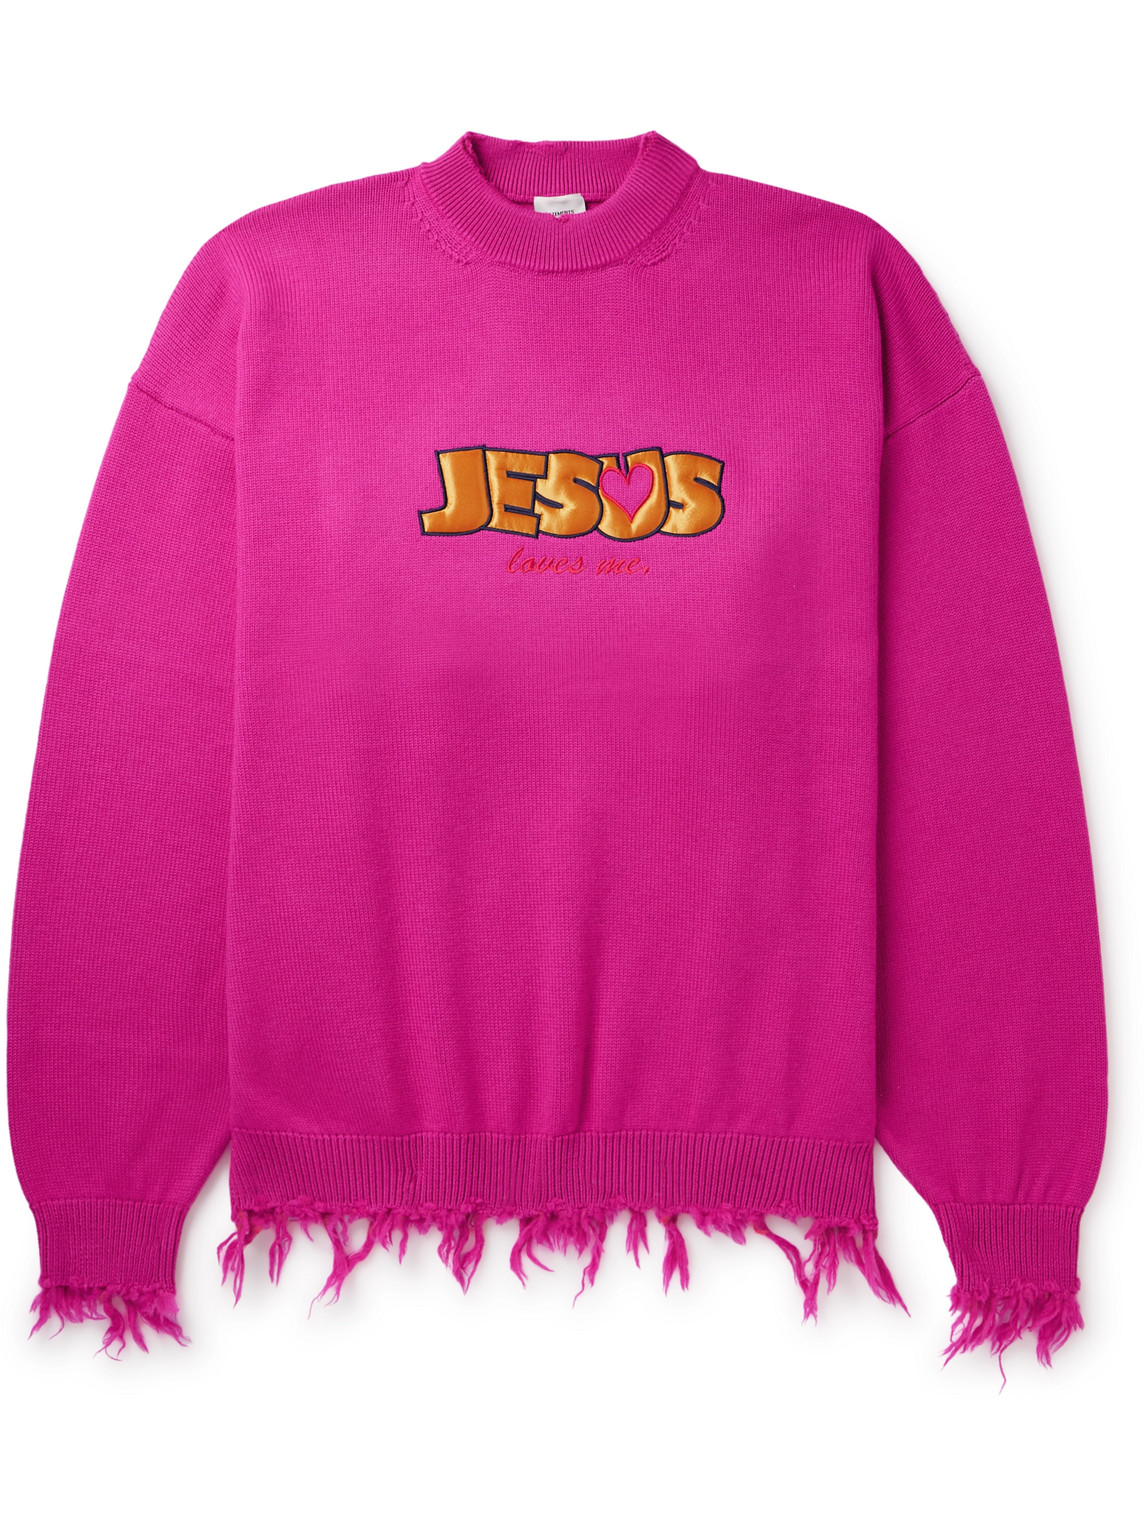 VETEMENTS - Jesus Loves You Distressed Merino Wool Sweater - Men - Pink - XS von VETEMENTS